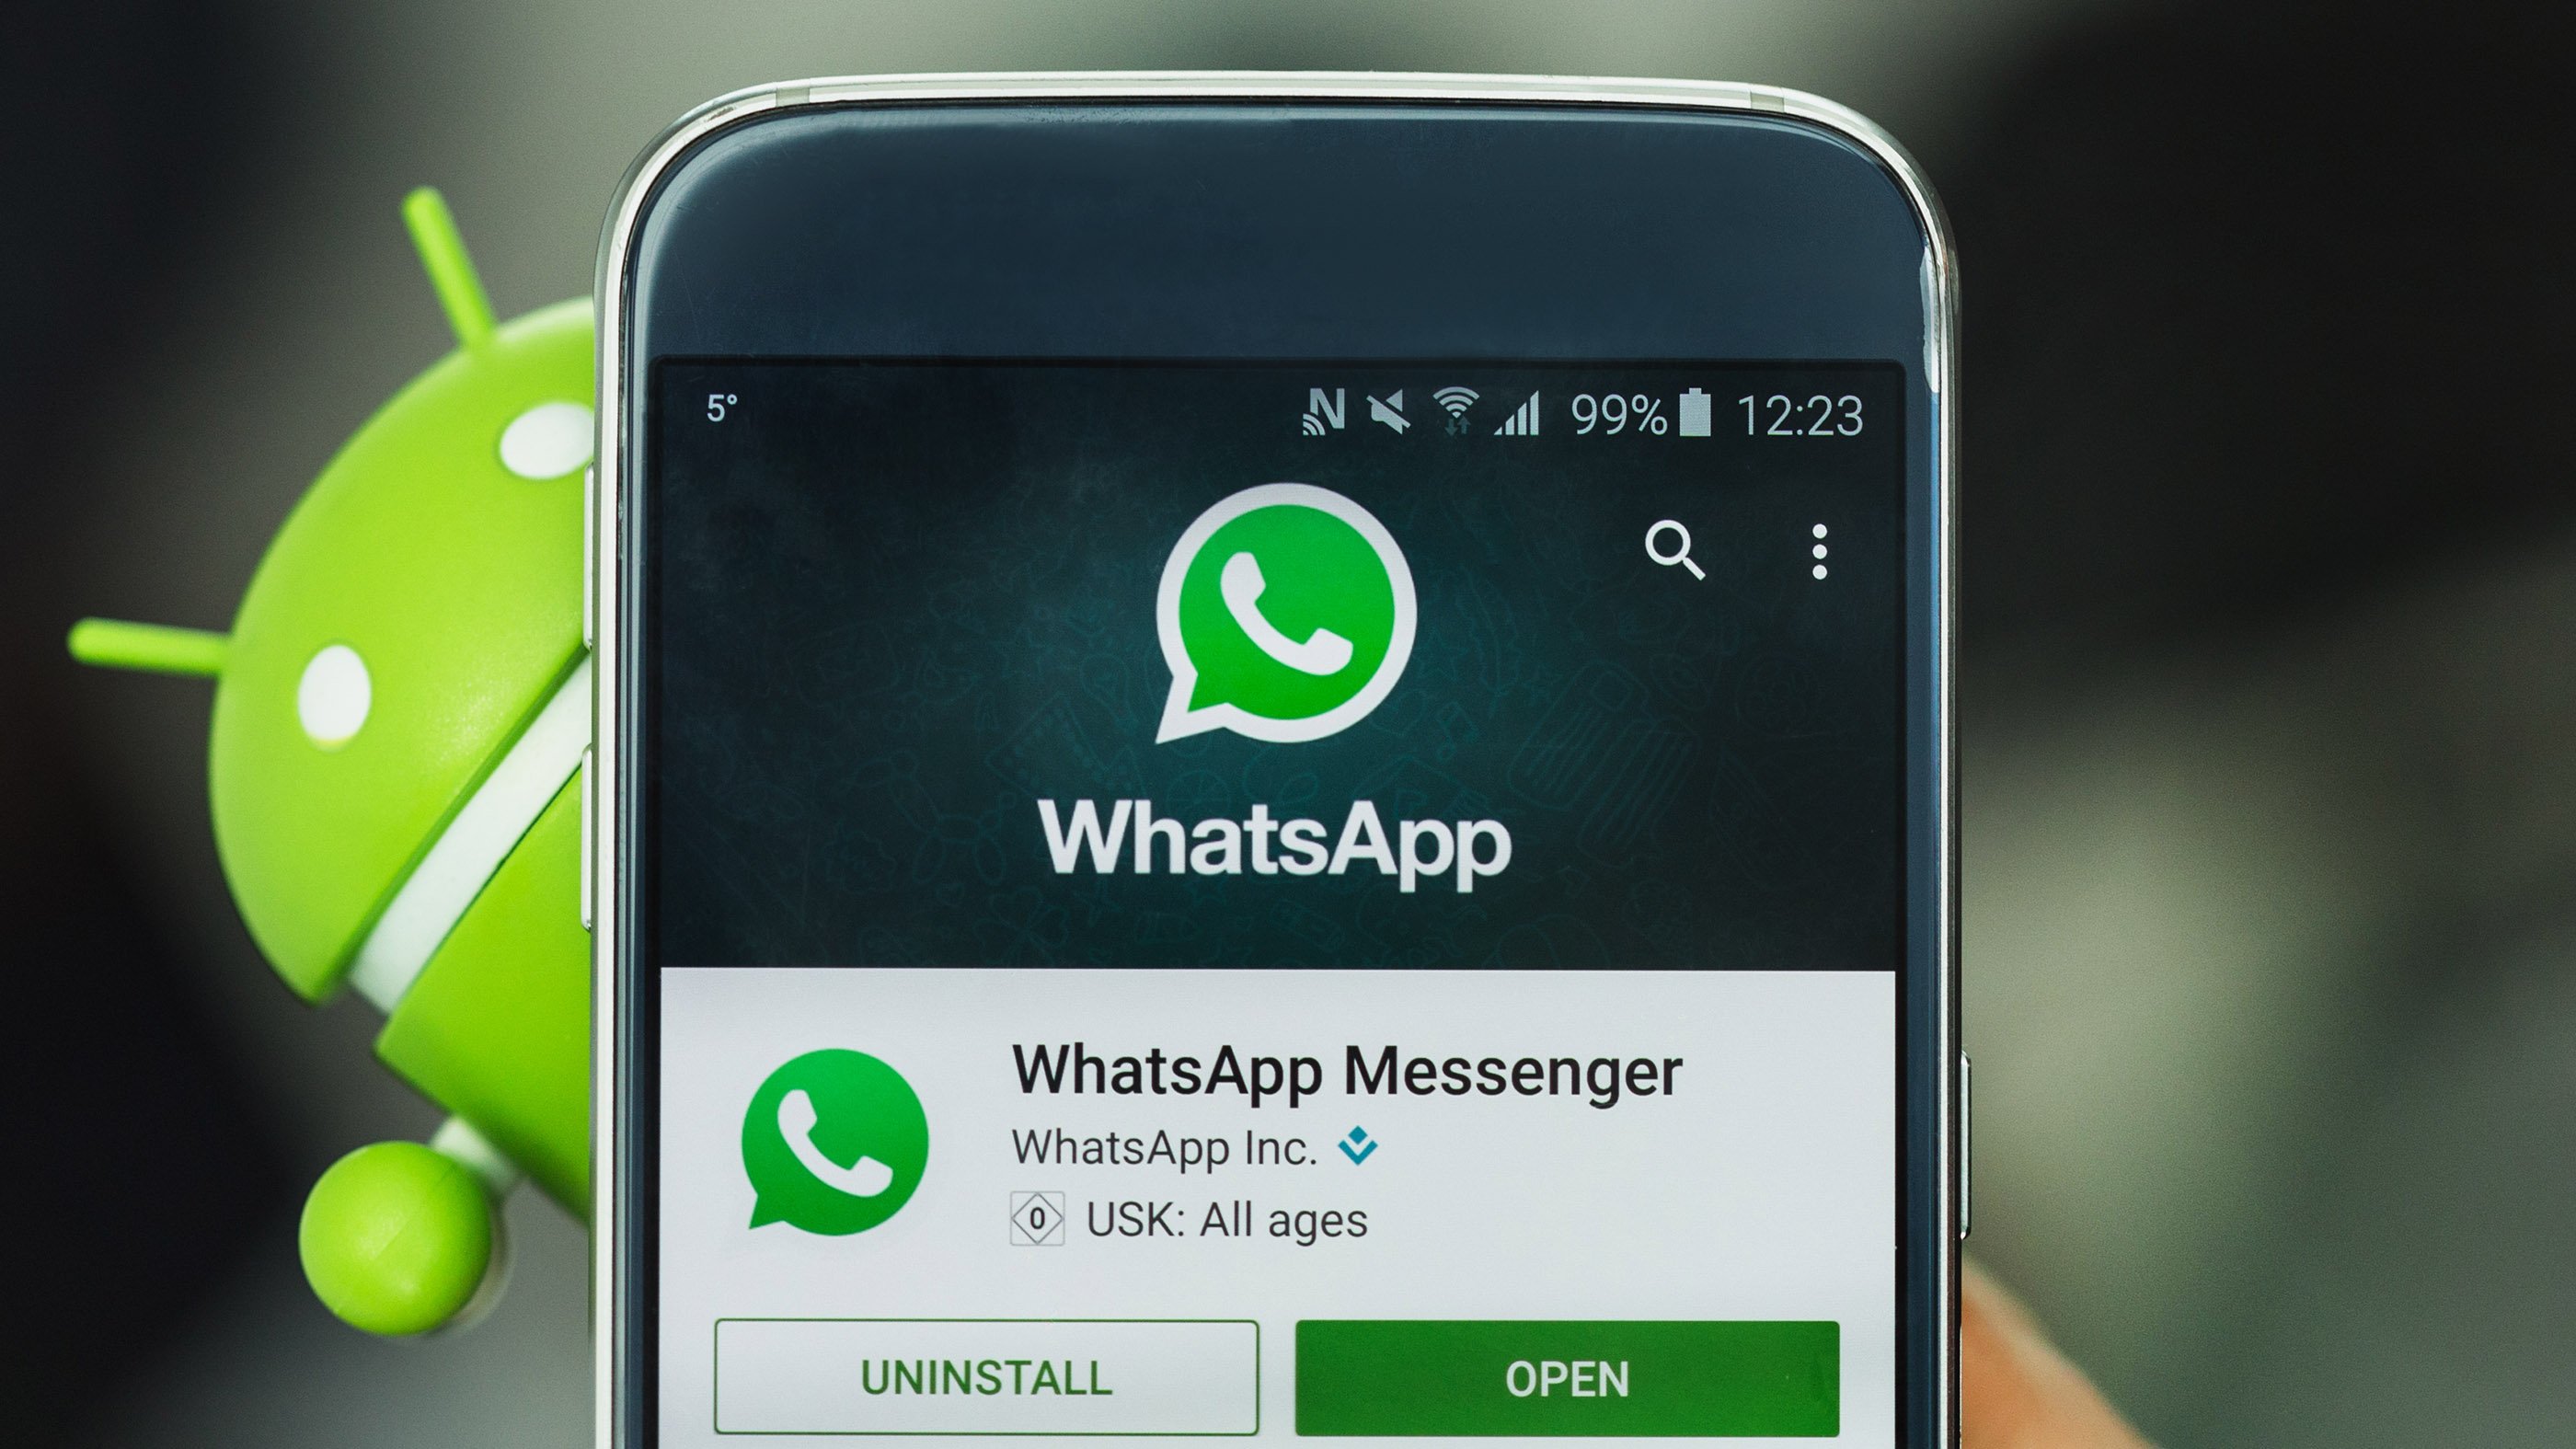 Broma del “Círculo negro de WhatsApp” se extiende masivamente